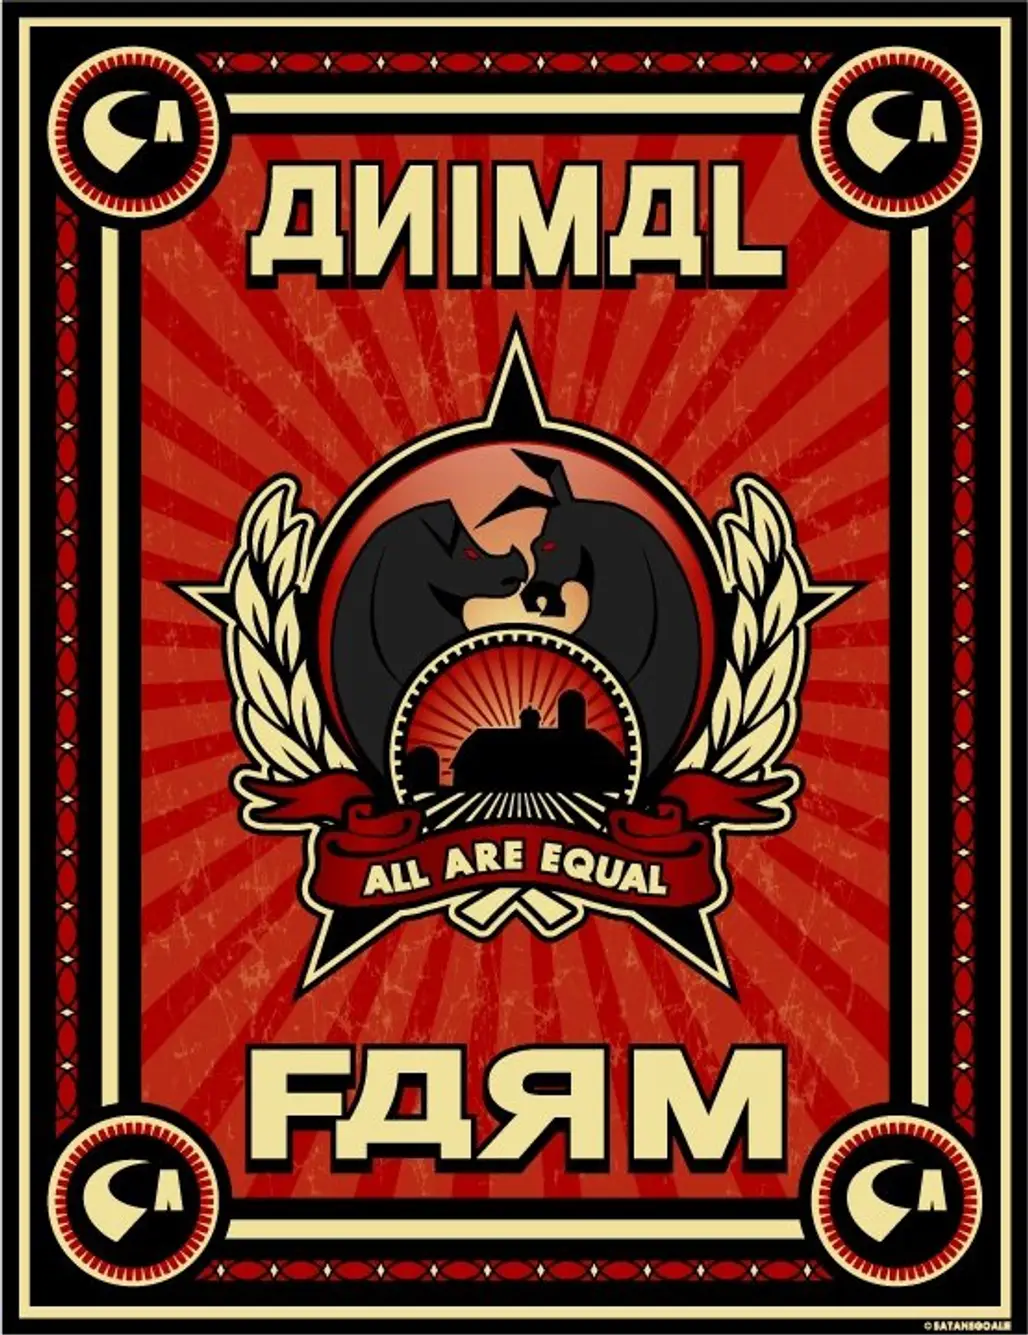 Animal Farm – George Orwell